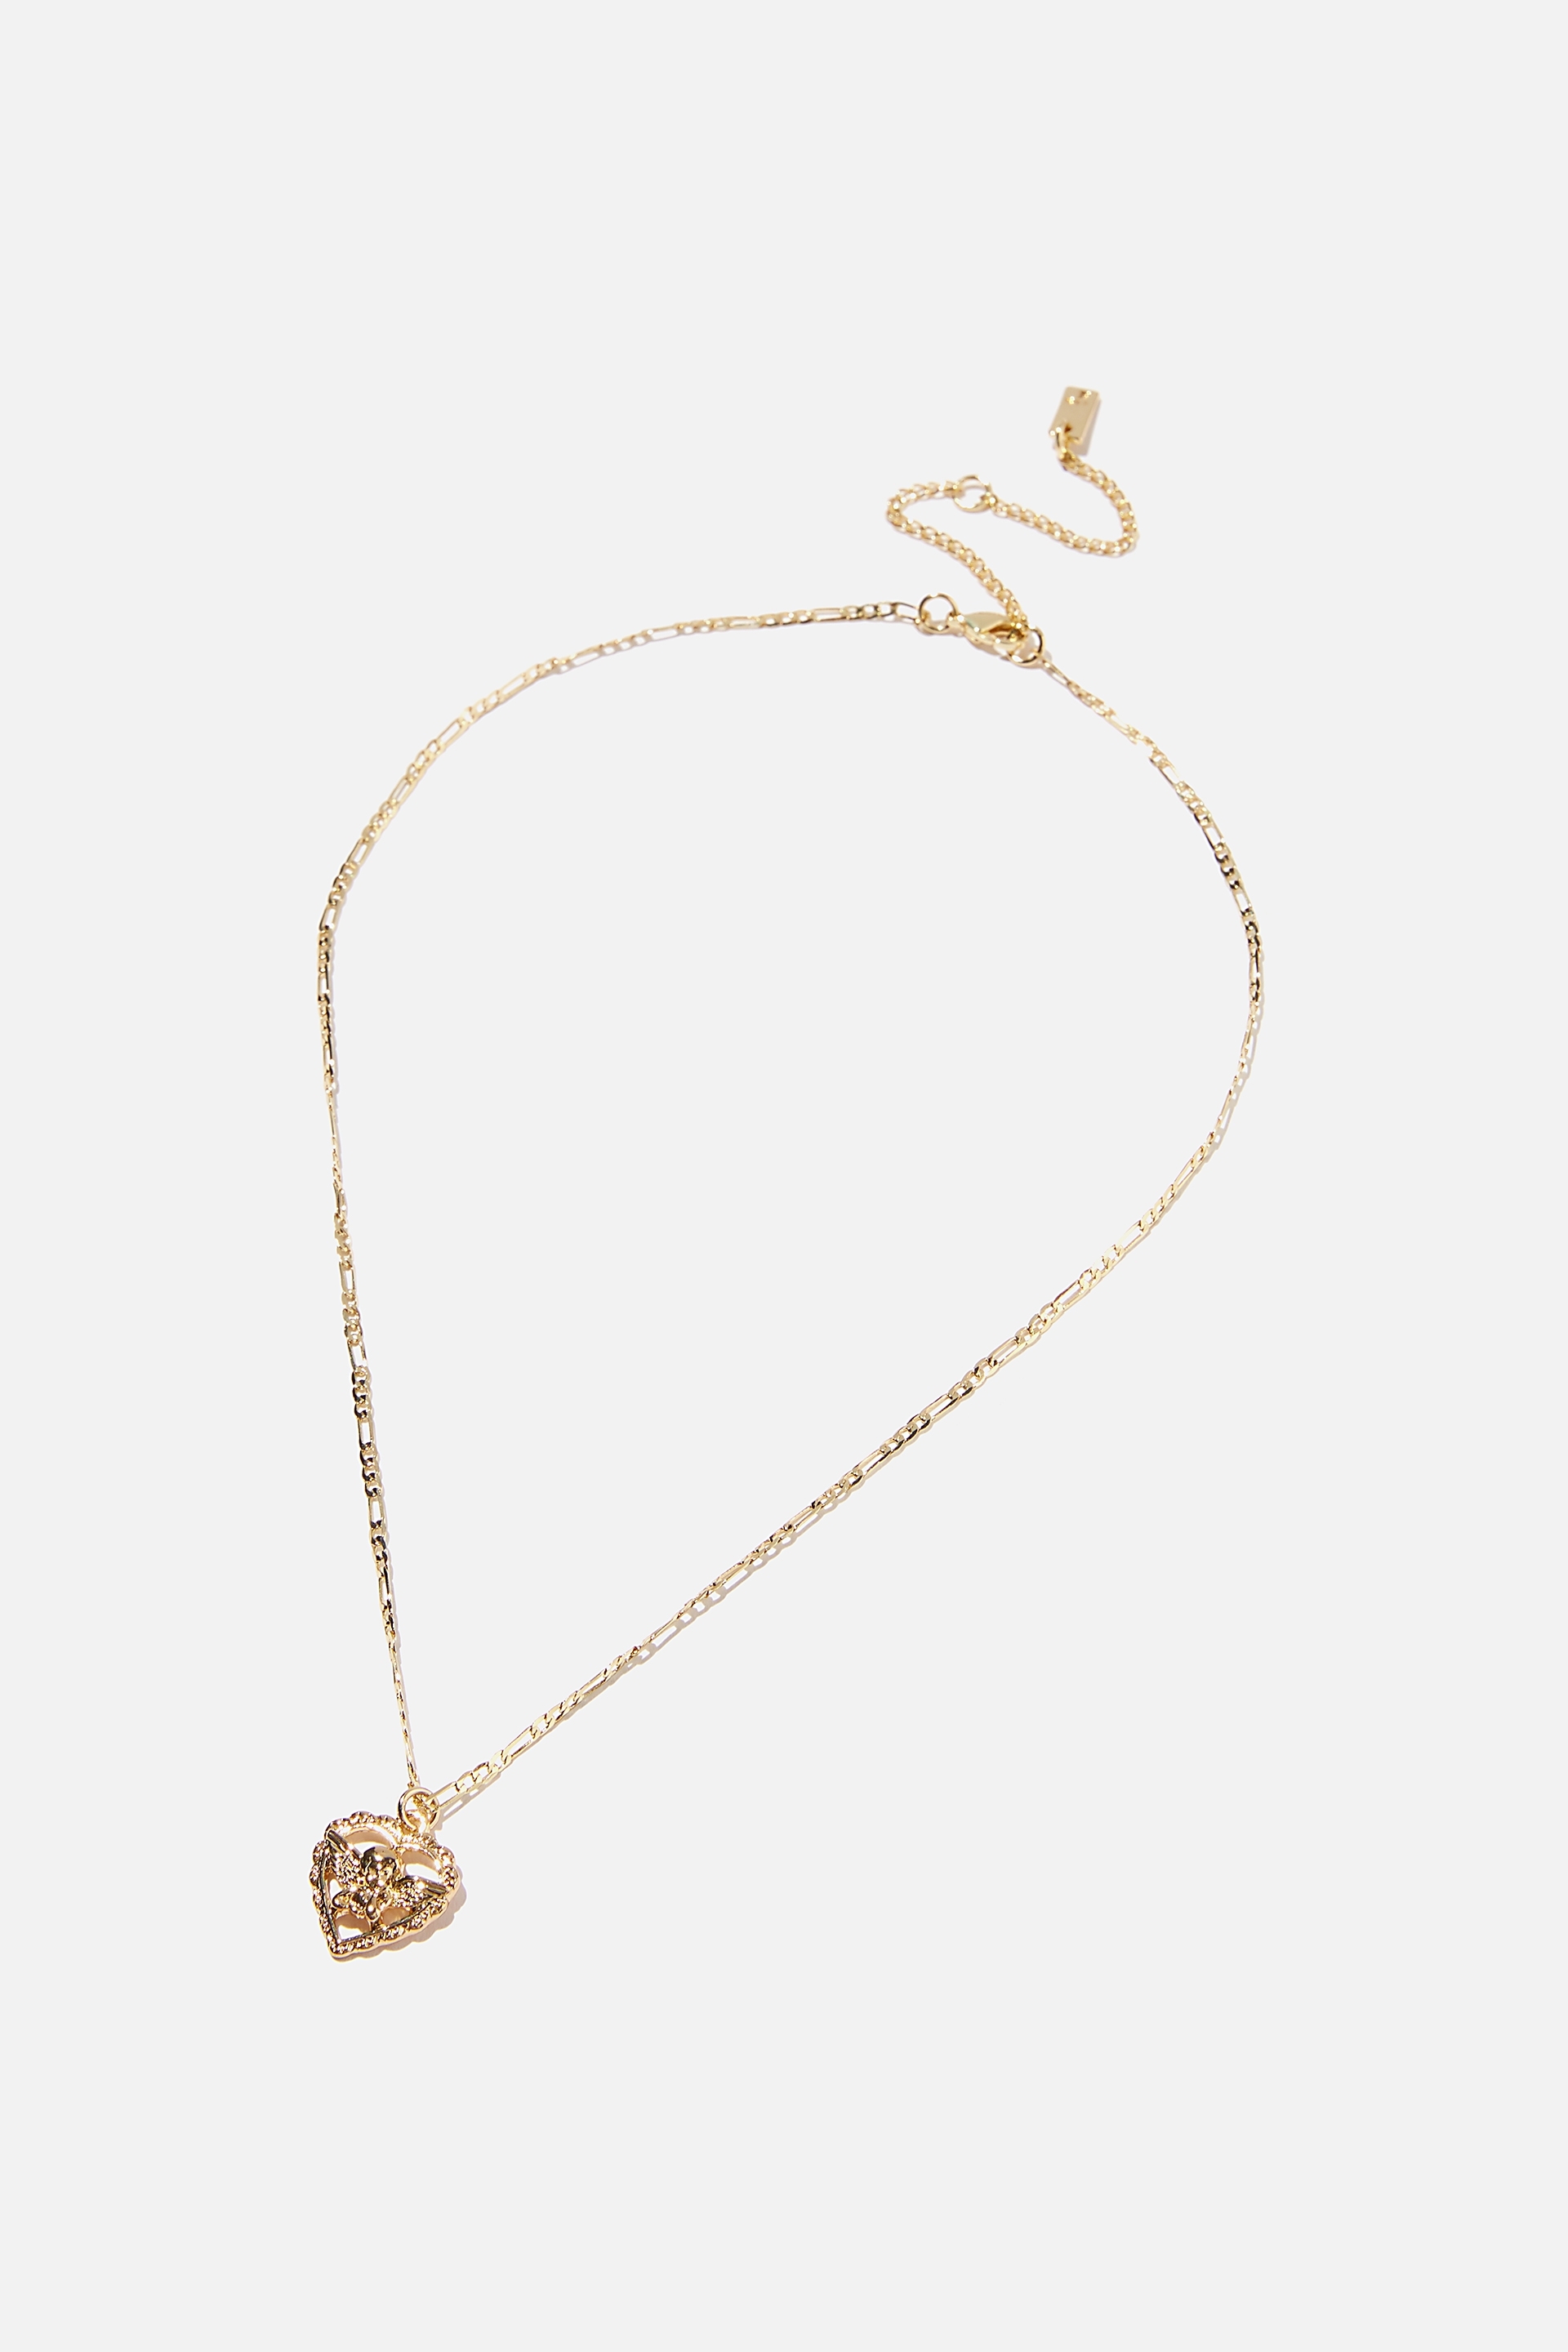 Rubi - Premium Pendant Necklace - Gold plated cherub heart